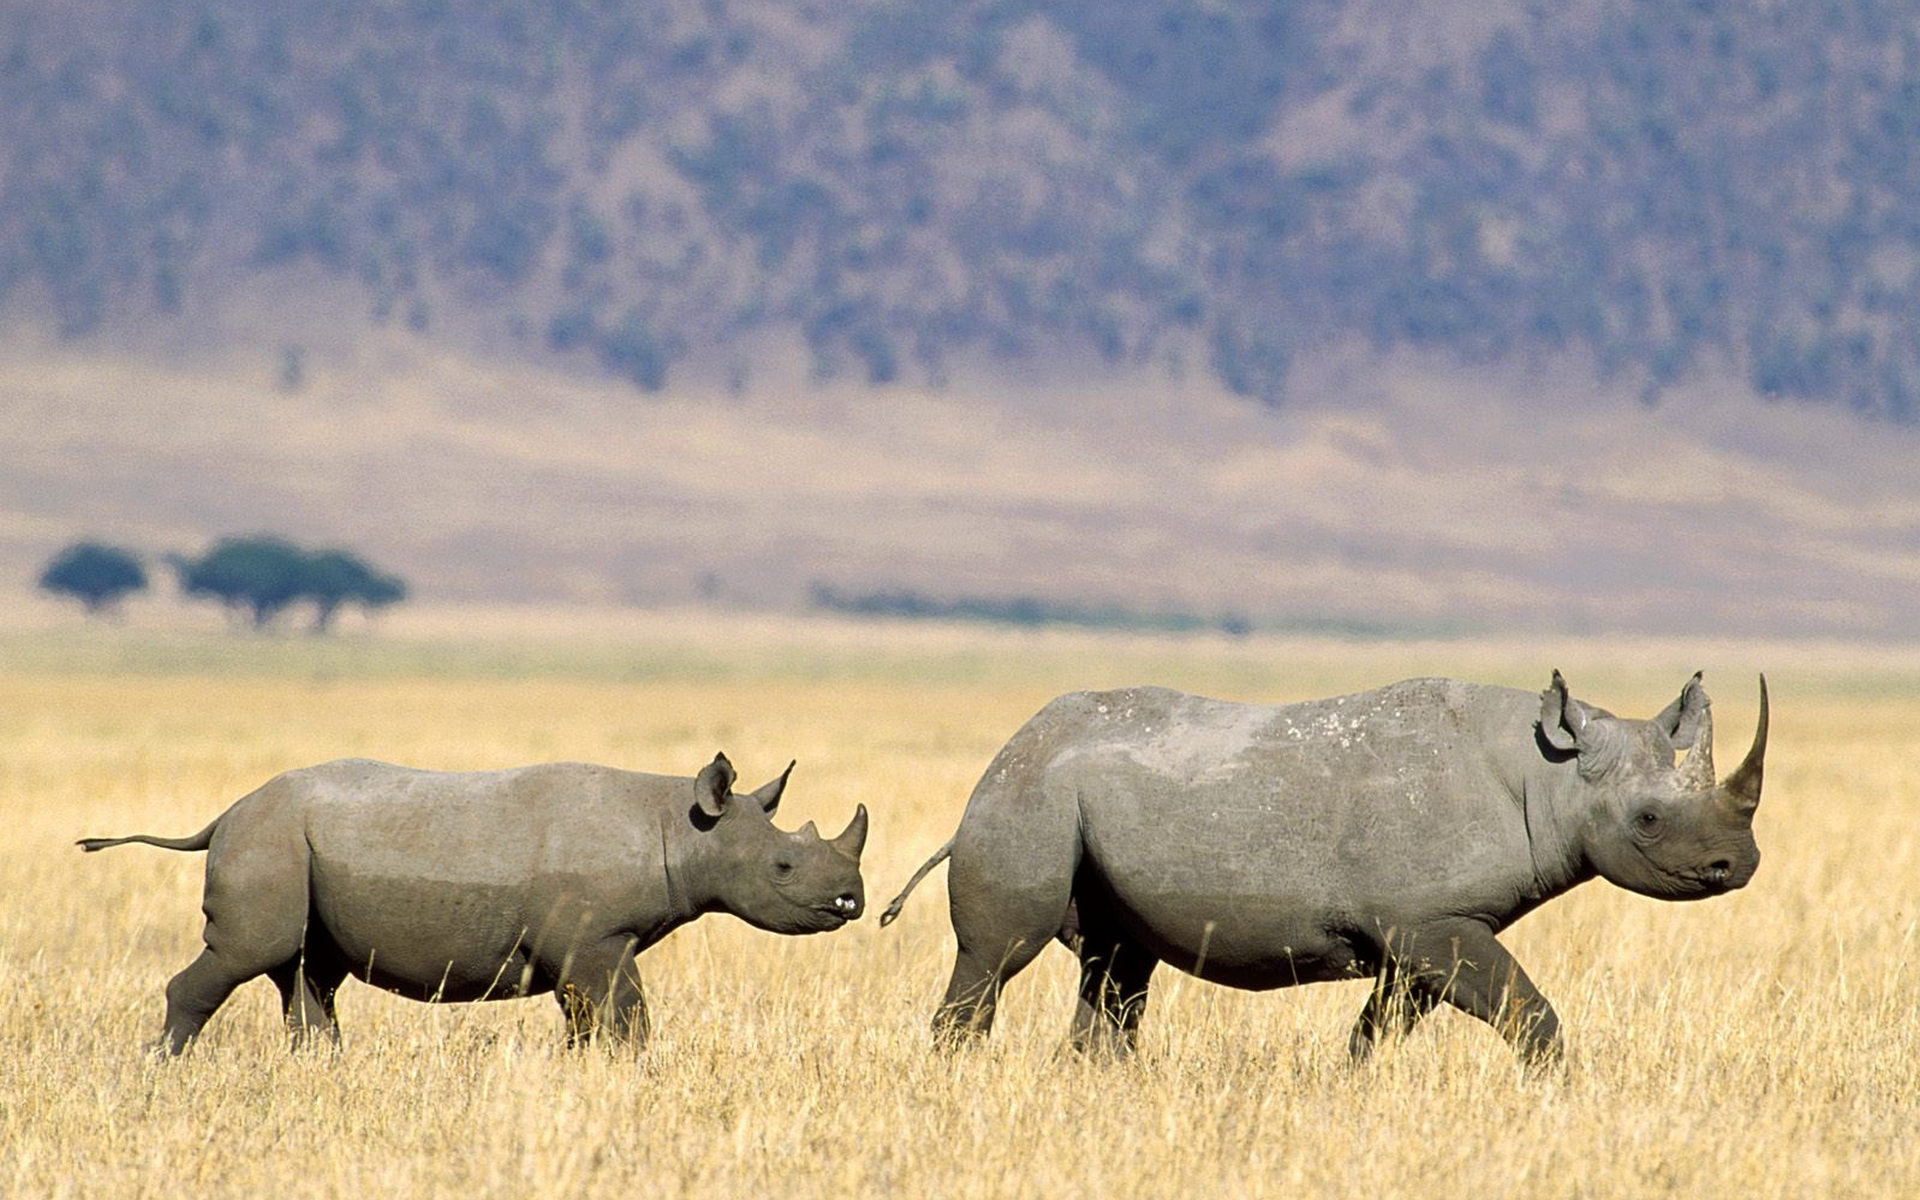 Wallpapers Rhinoceroses muzzles ears on the desktop